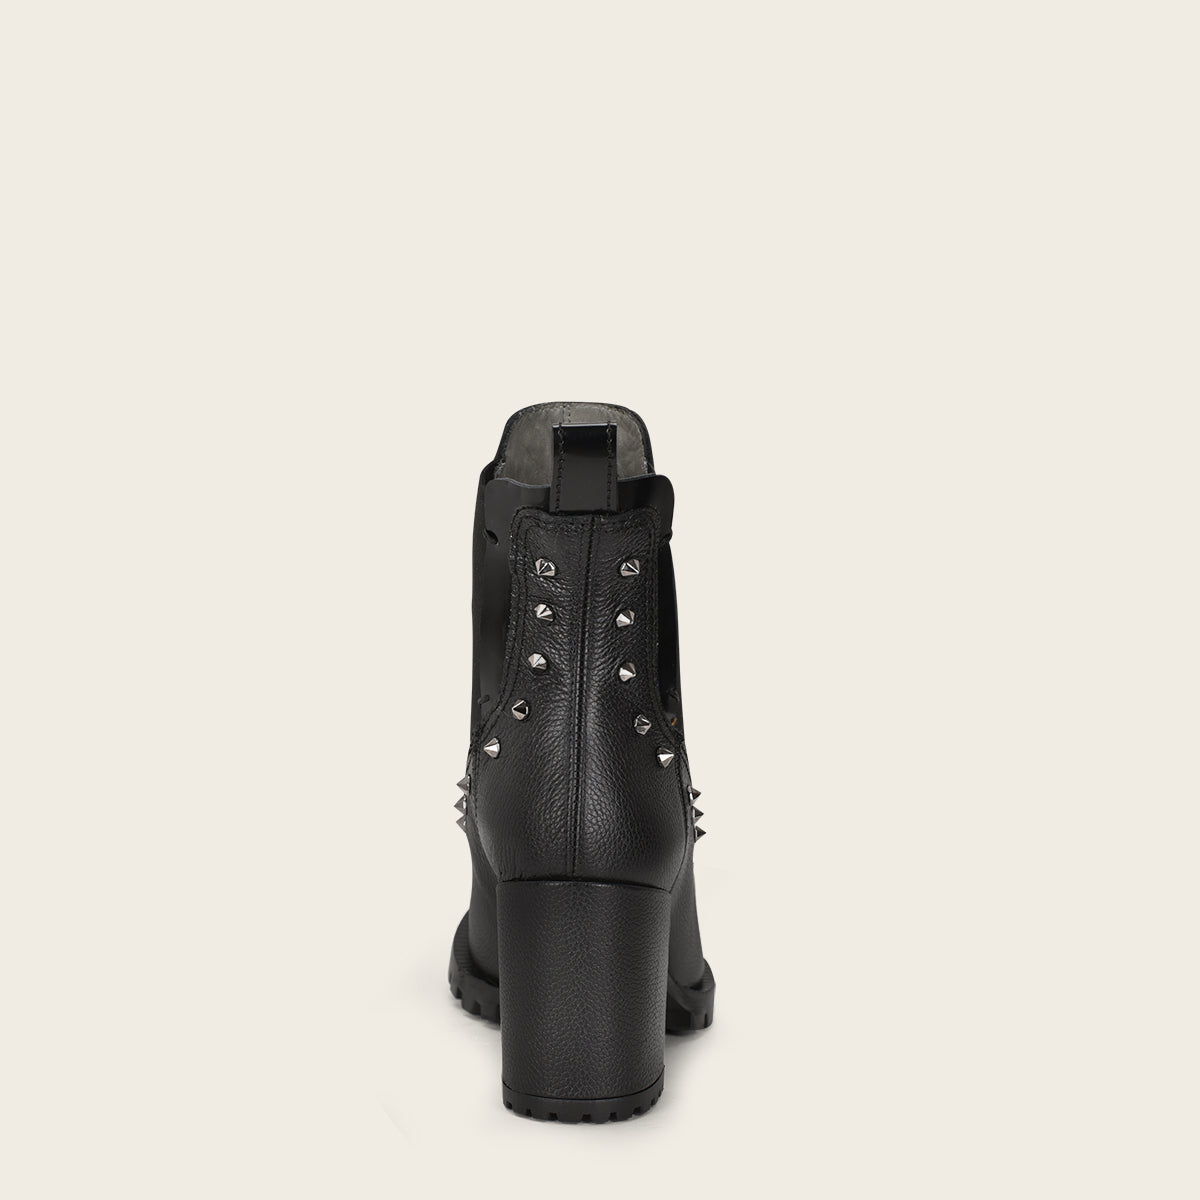 Urban black bootie with spike studs